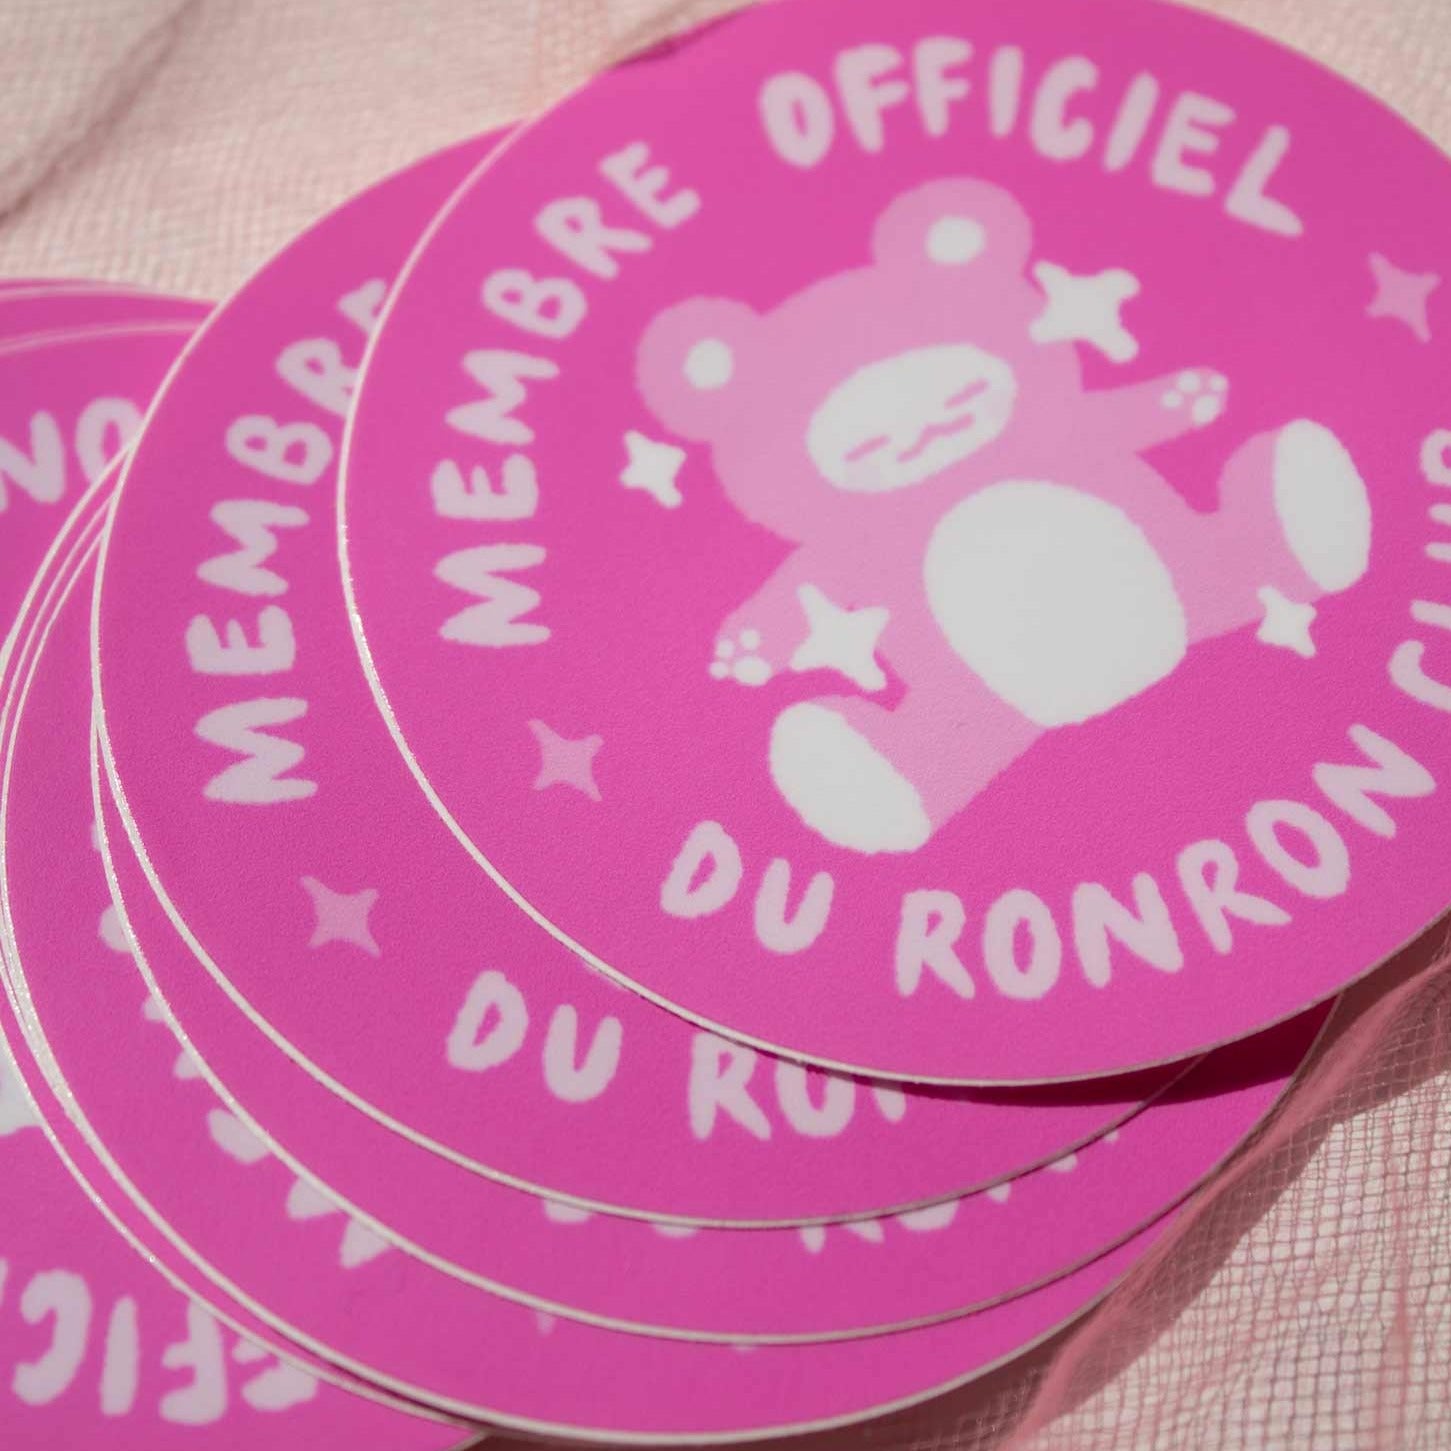 Official Ronron club member sticker 3"